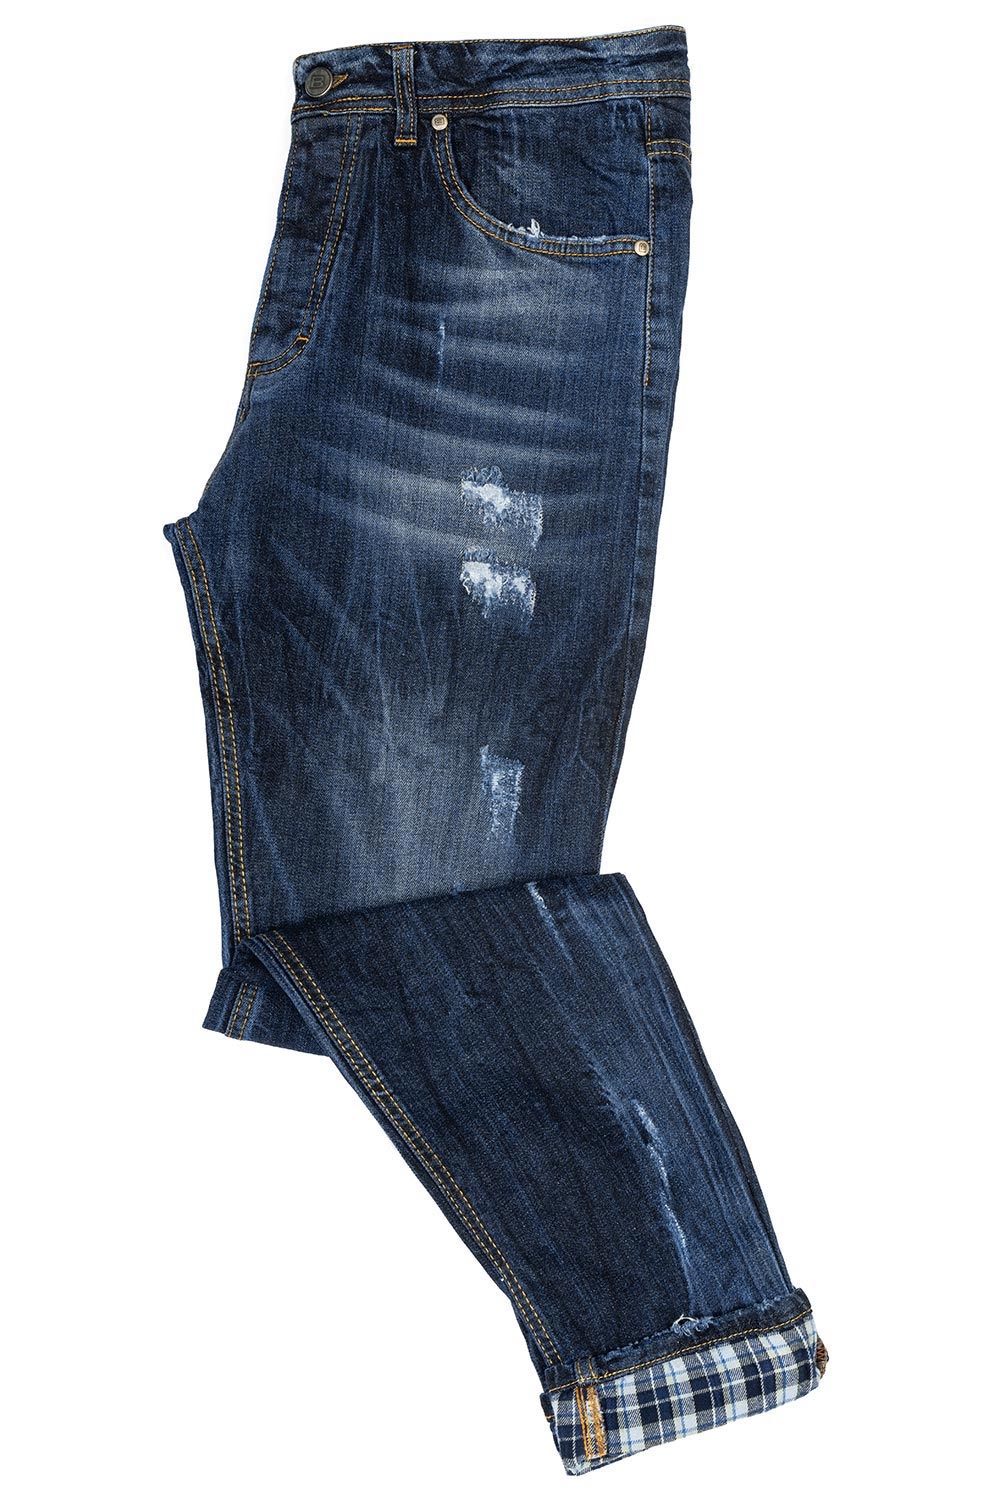 Blue jeans 1